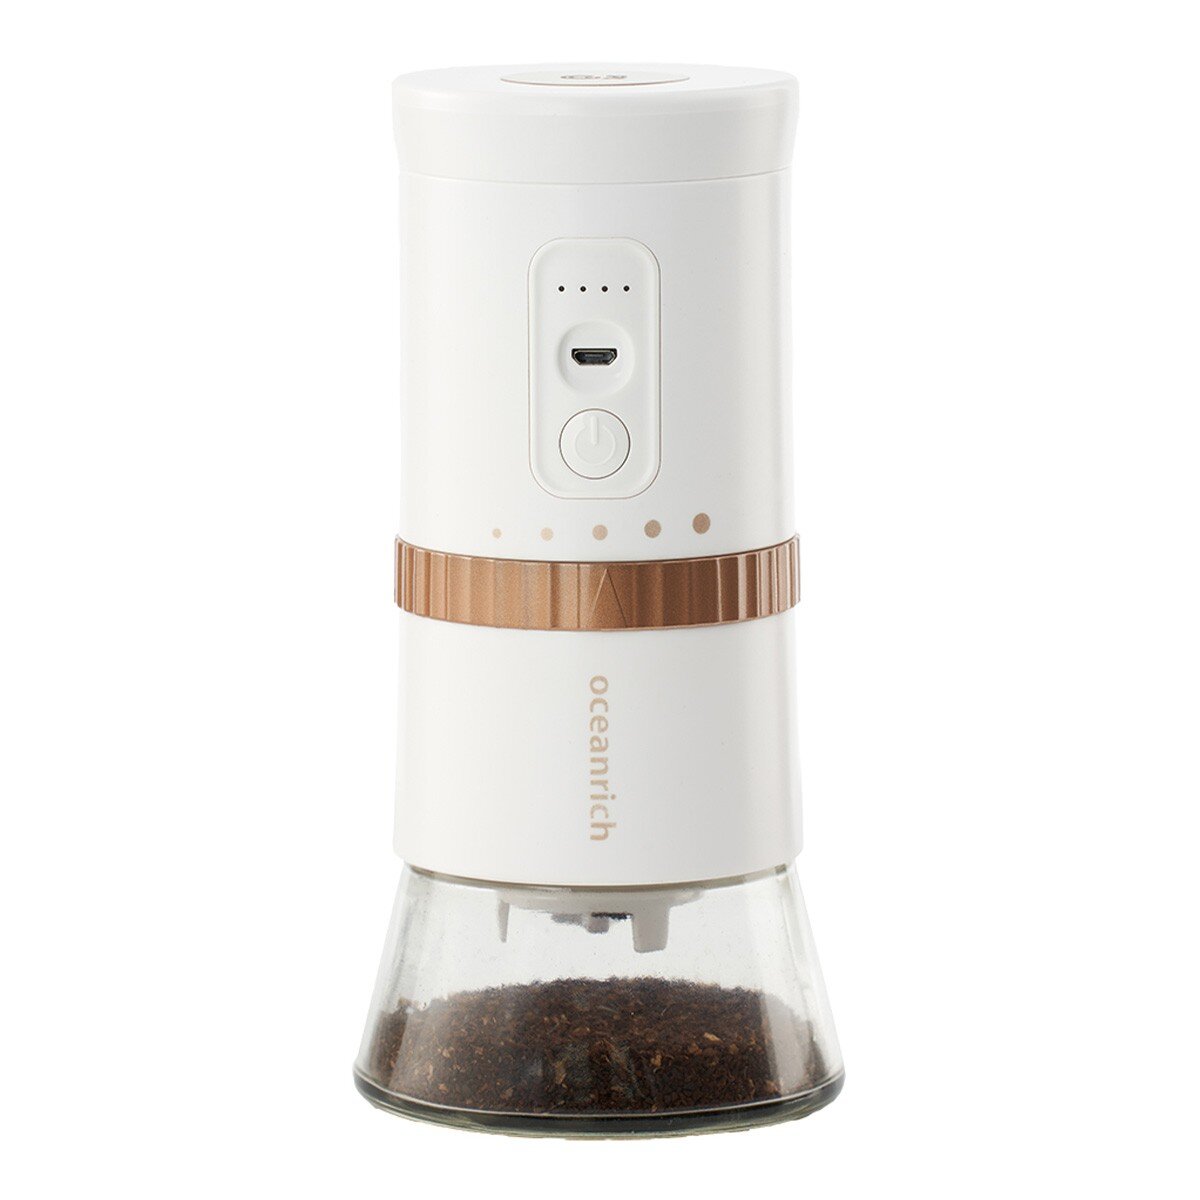 Oceanrich 歐新力奇 G2 便攜式電動磨豆機+咖啡粉罐(含蓋) 白